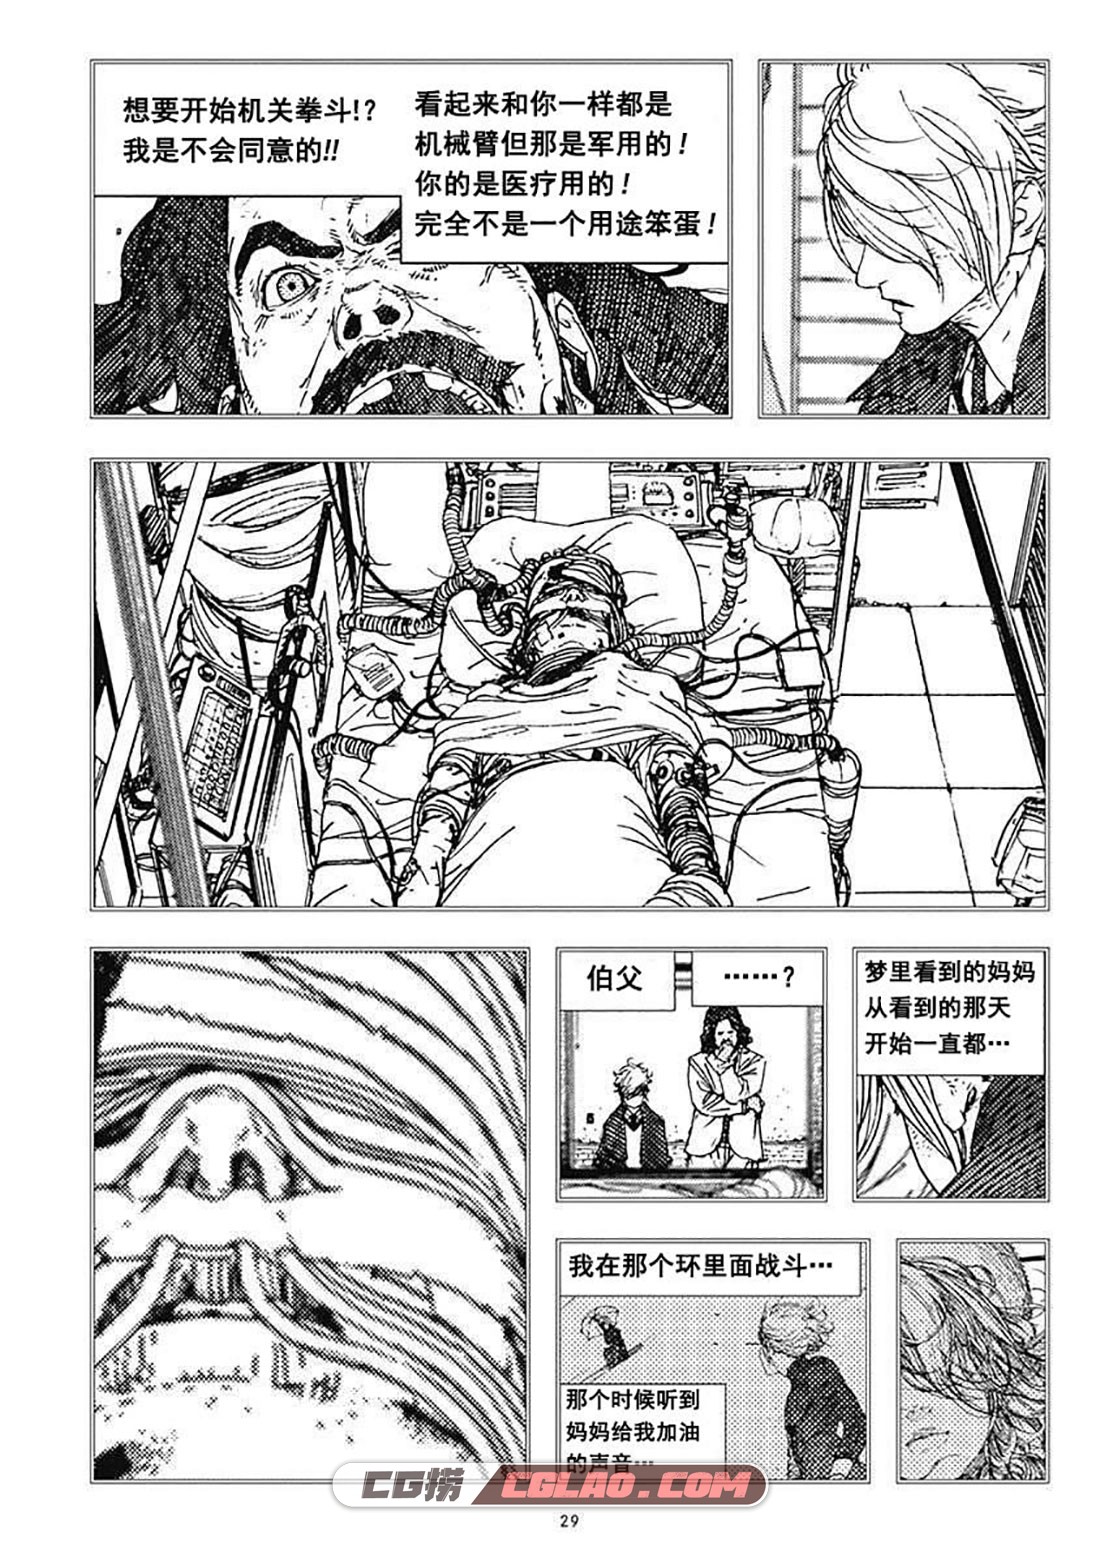 Levius 中田春弥 第一部1-43话+第二部1-18话+特别篇2话 漫画全集,0033.jpg